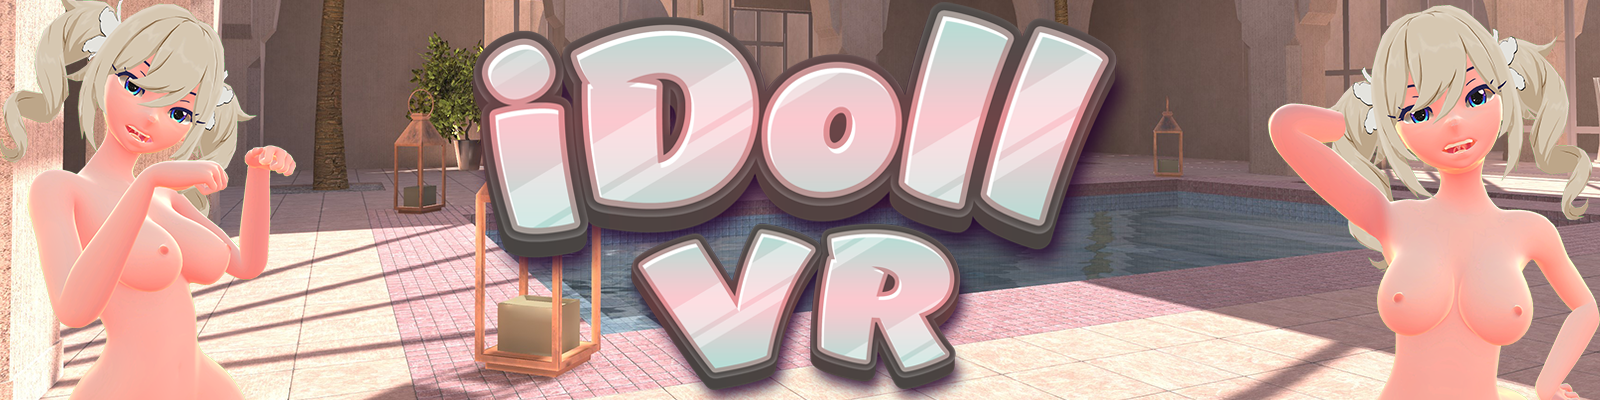 iDoll (PC VR Edition)